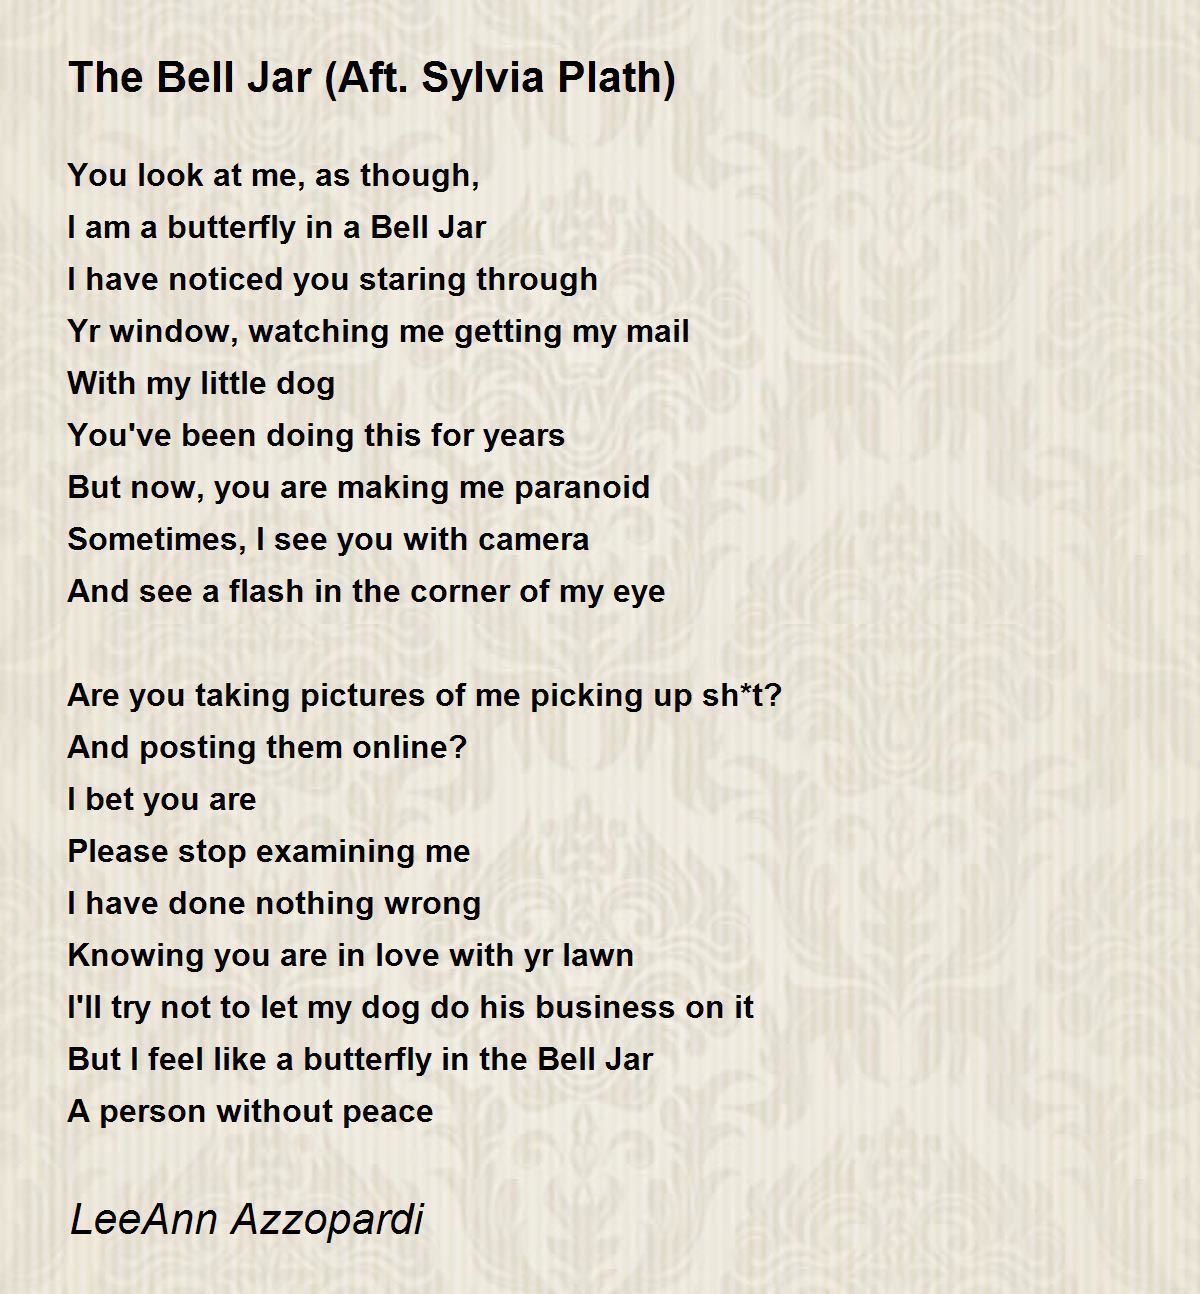 The Bell Jar (Aft. Sylvia Plath) - The Bell Jar (Aft. Sylvia Plath) Poem by  LeeAnn Azzopardi